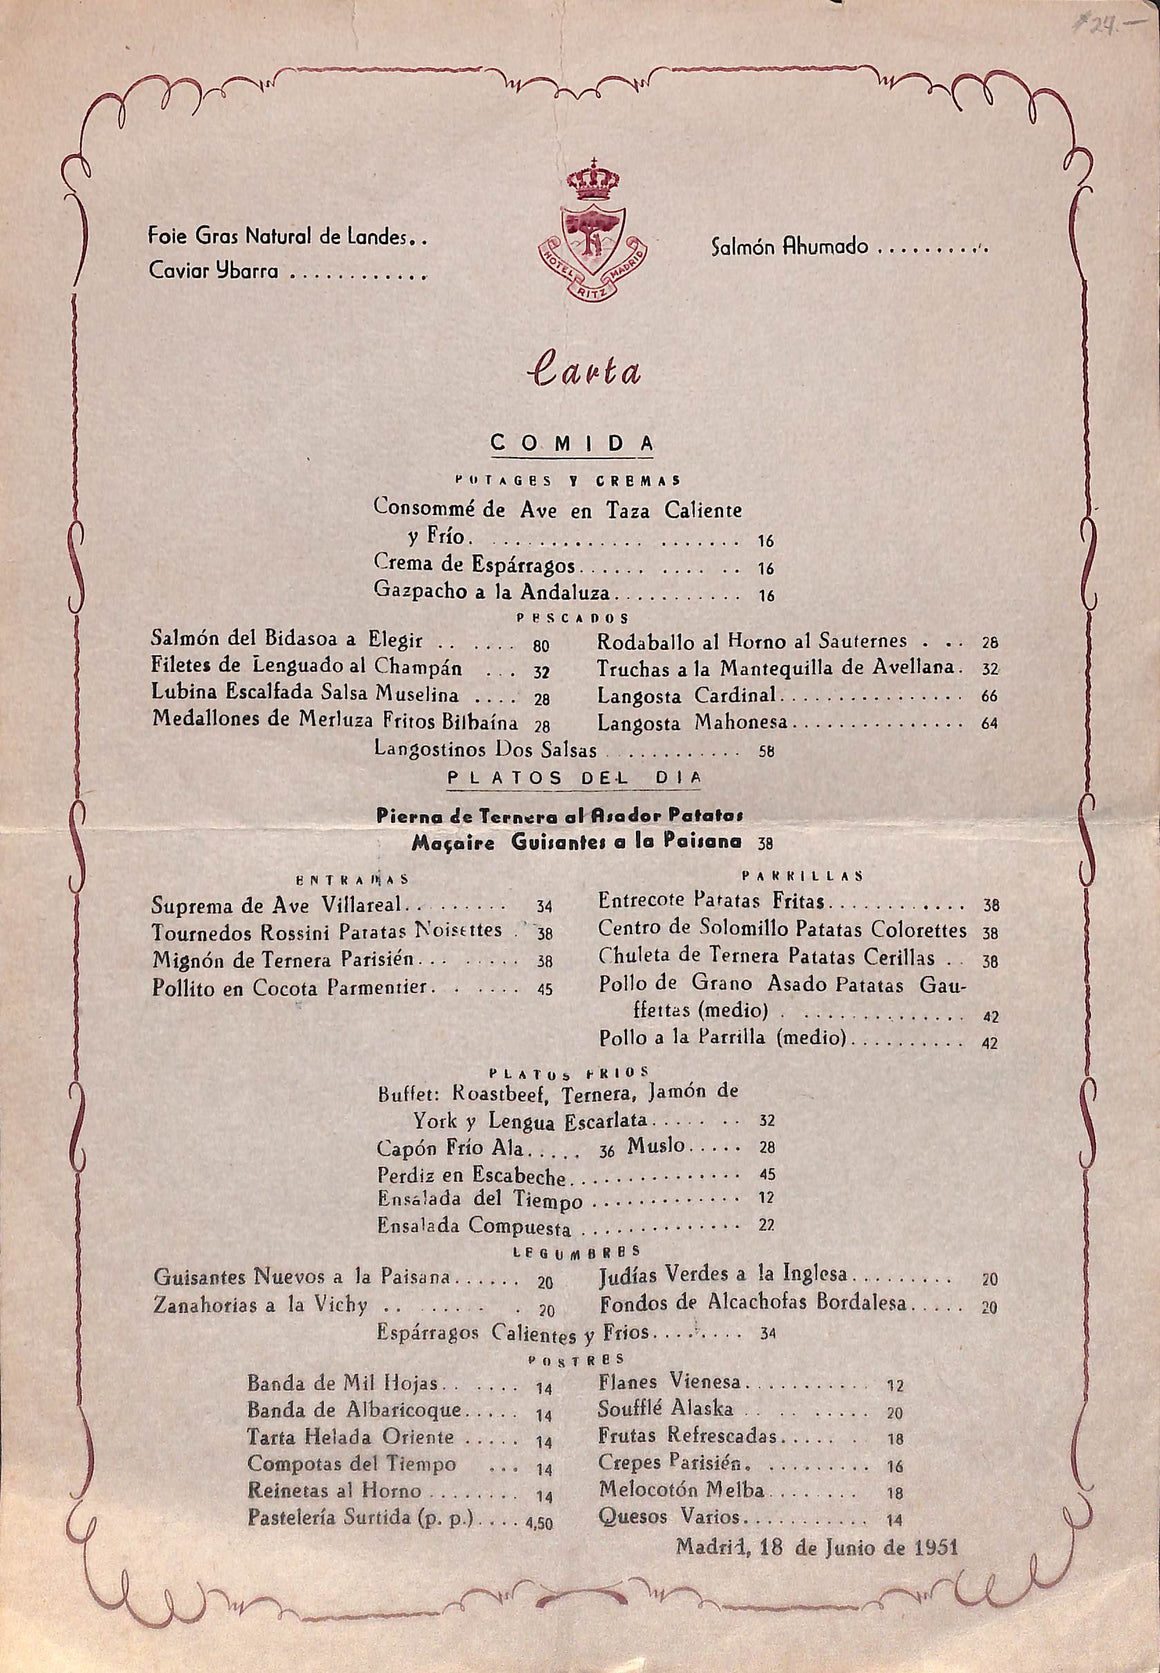 "Hotel Ritz Madrid Menu" 1951